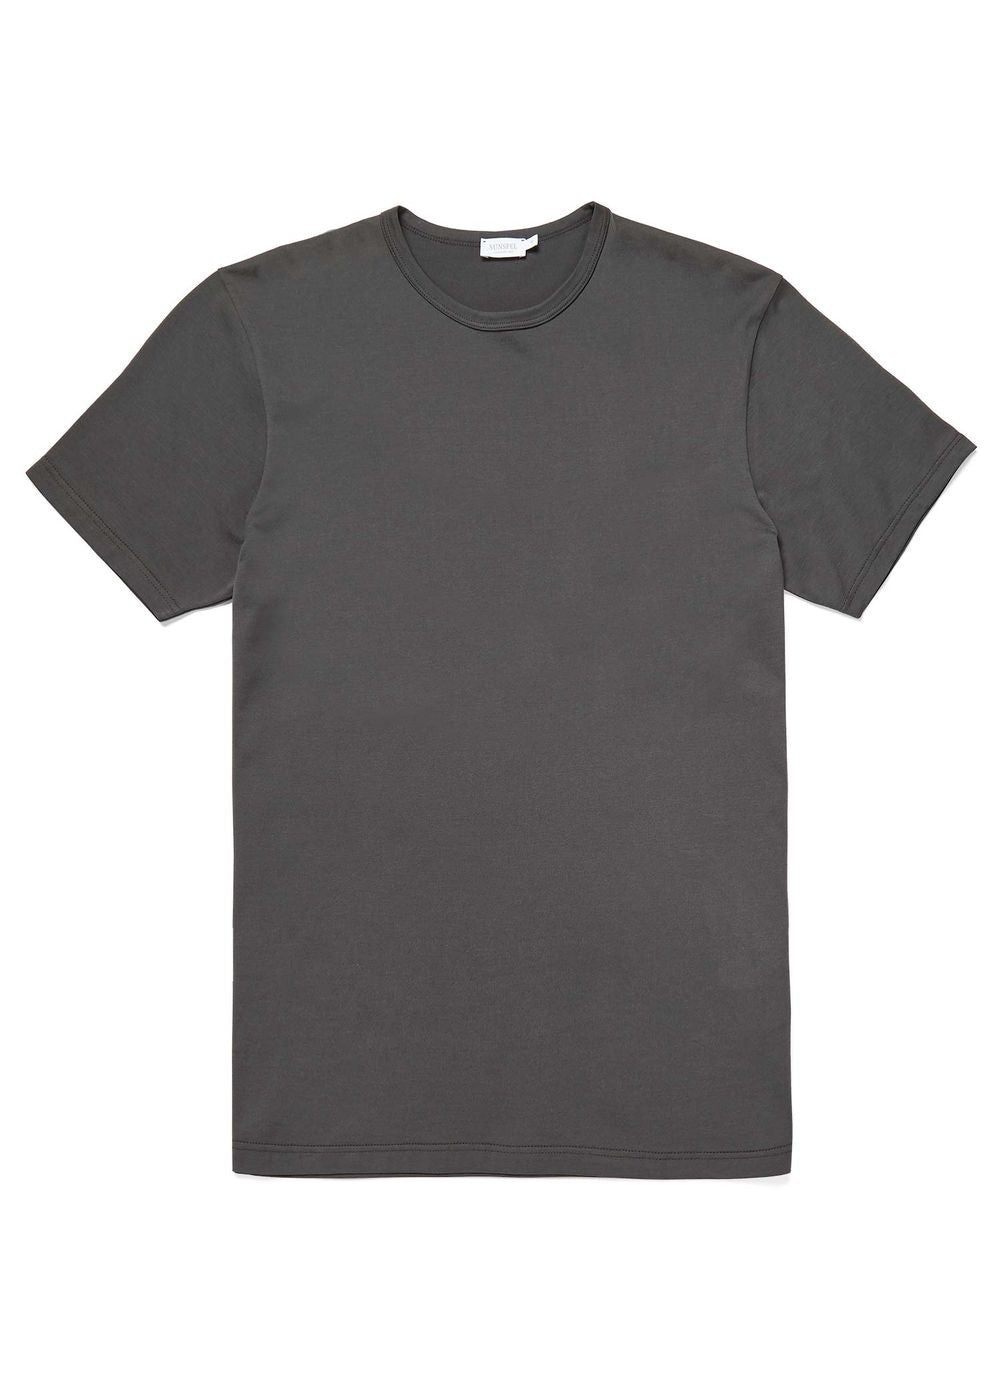 T-shirt, style GTYU